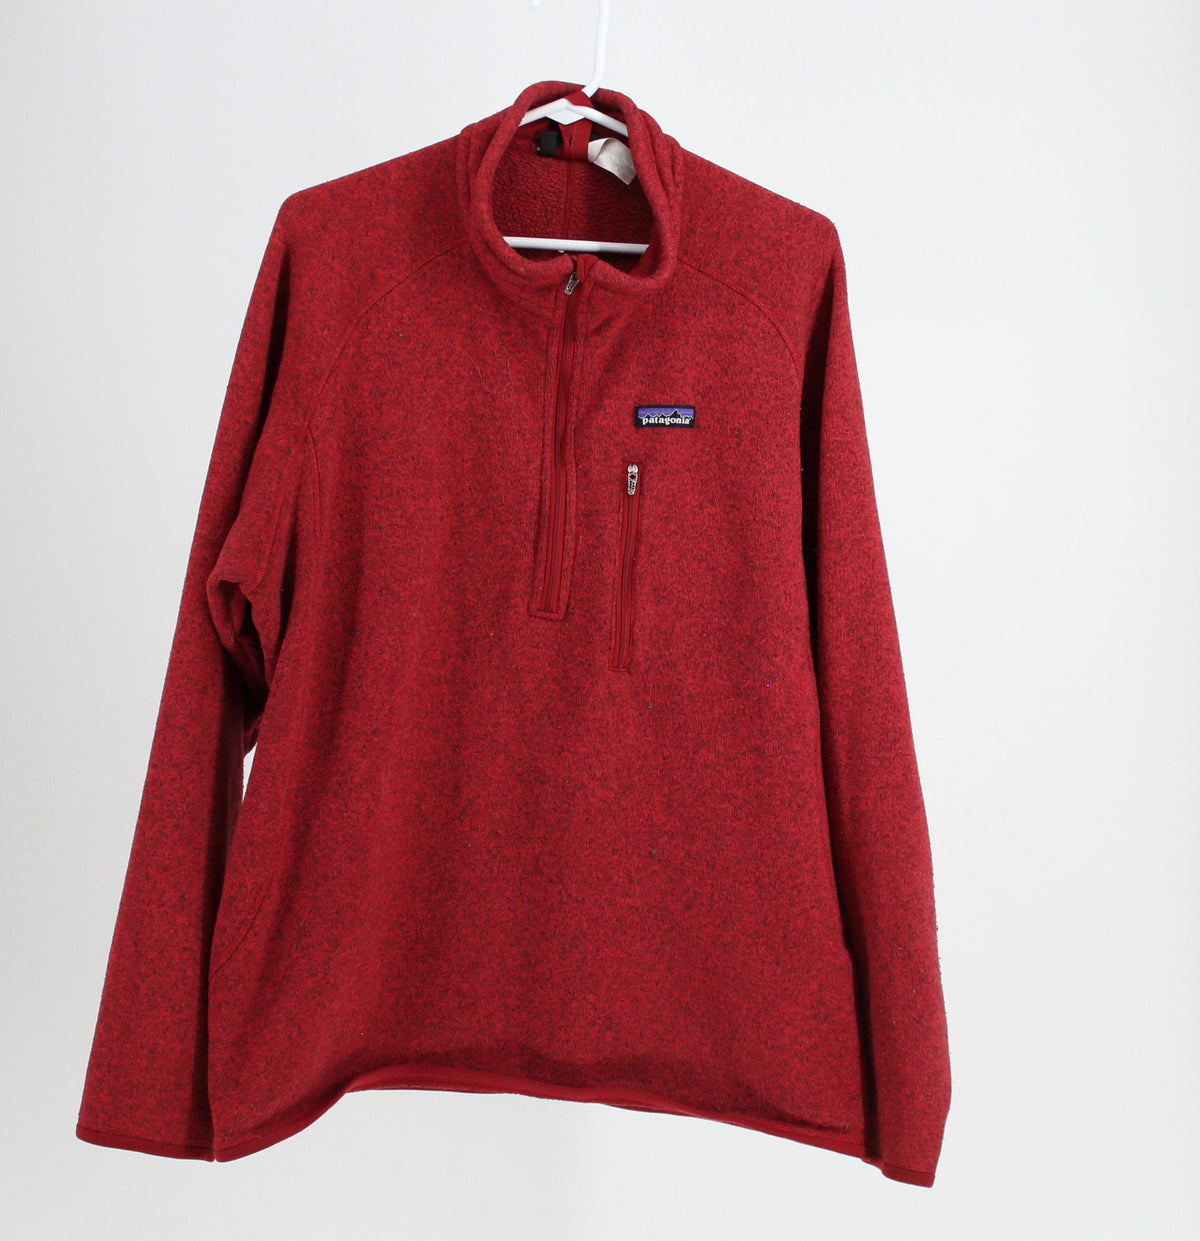 Patagonia Red Fleece Quarter Zip Jacket